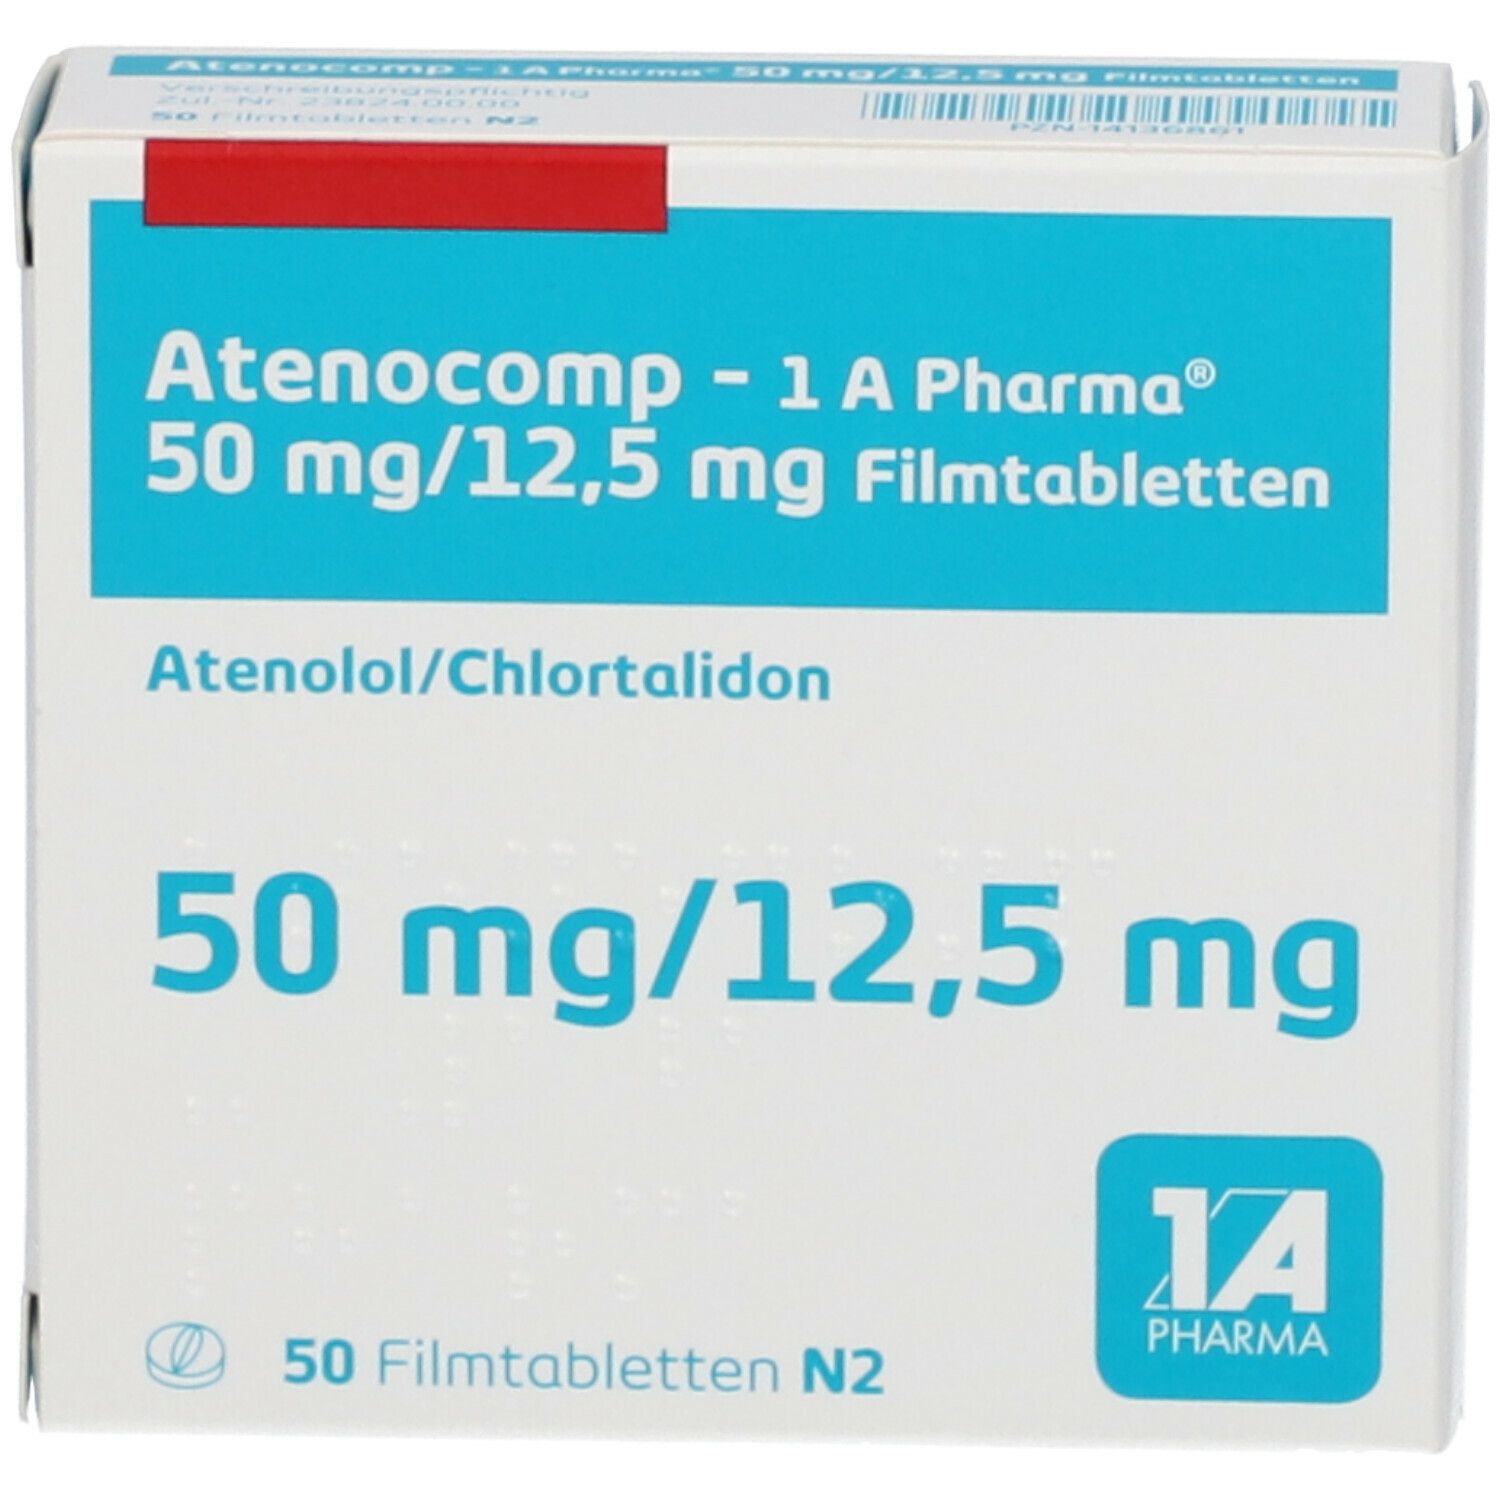 Atenocomp - 1 A Pharma® 50 mg/12,5 mg